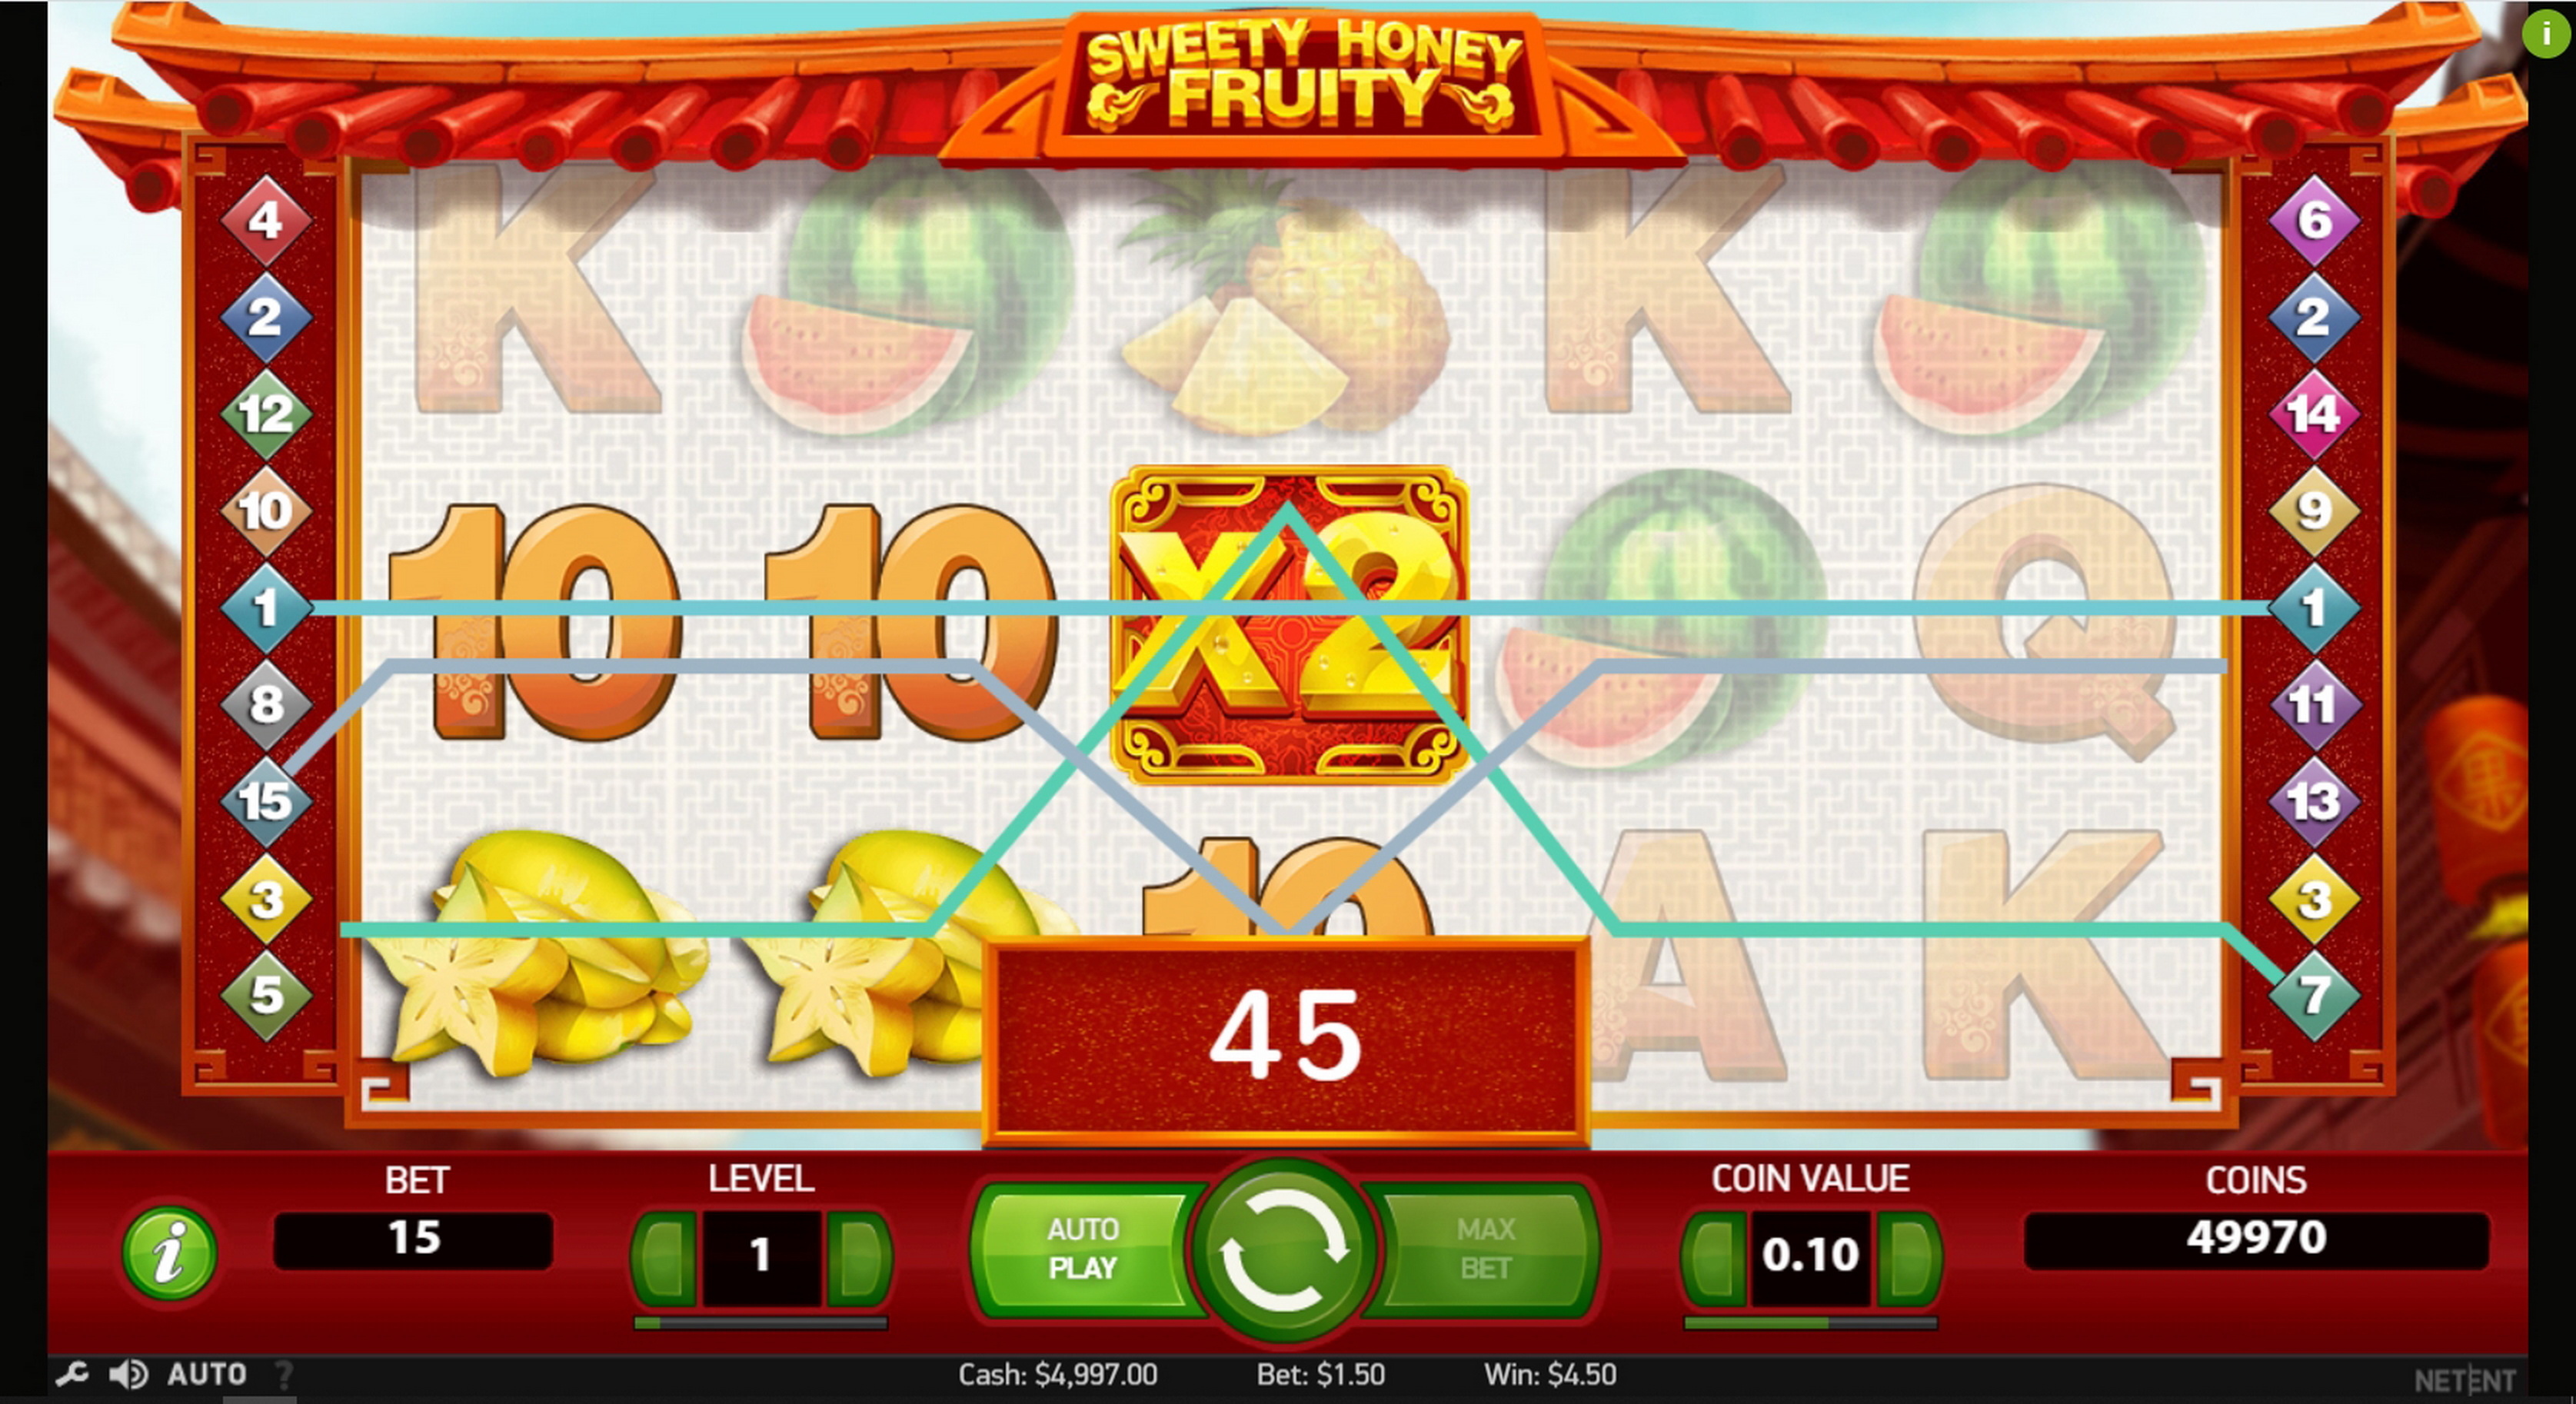 Win Money in Sweety Honey Fruity Free Slot Game by NetEnt